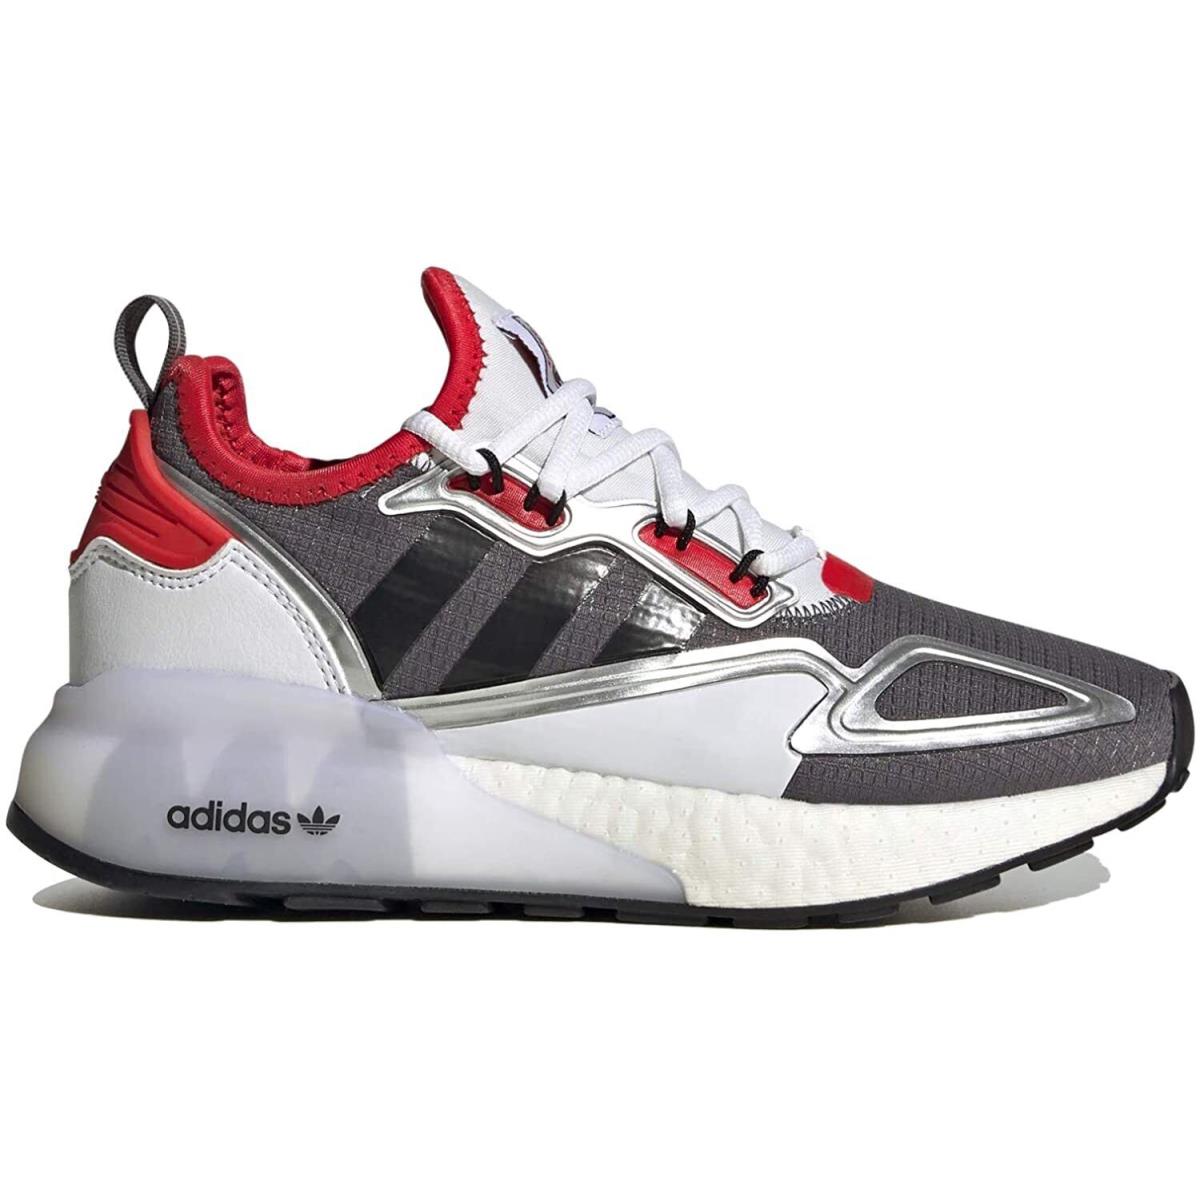 Adidas ZX 2K Boost J Running Big Kids Shoe FX8774 Size 4.5 Youth